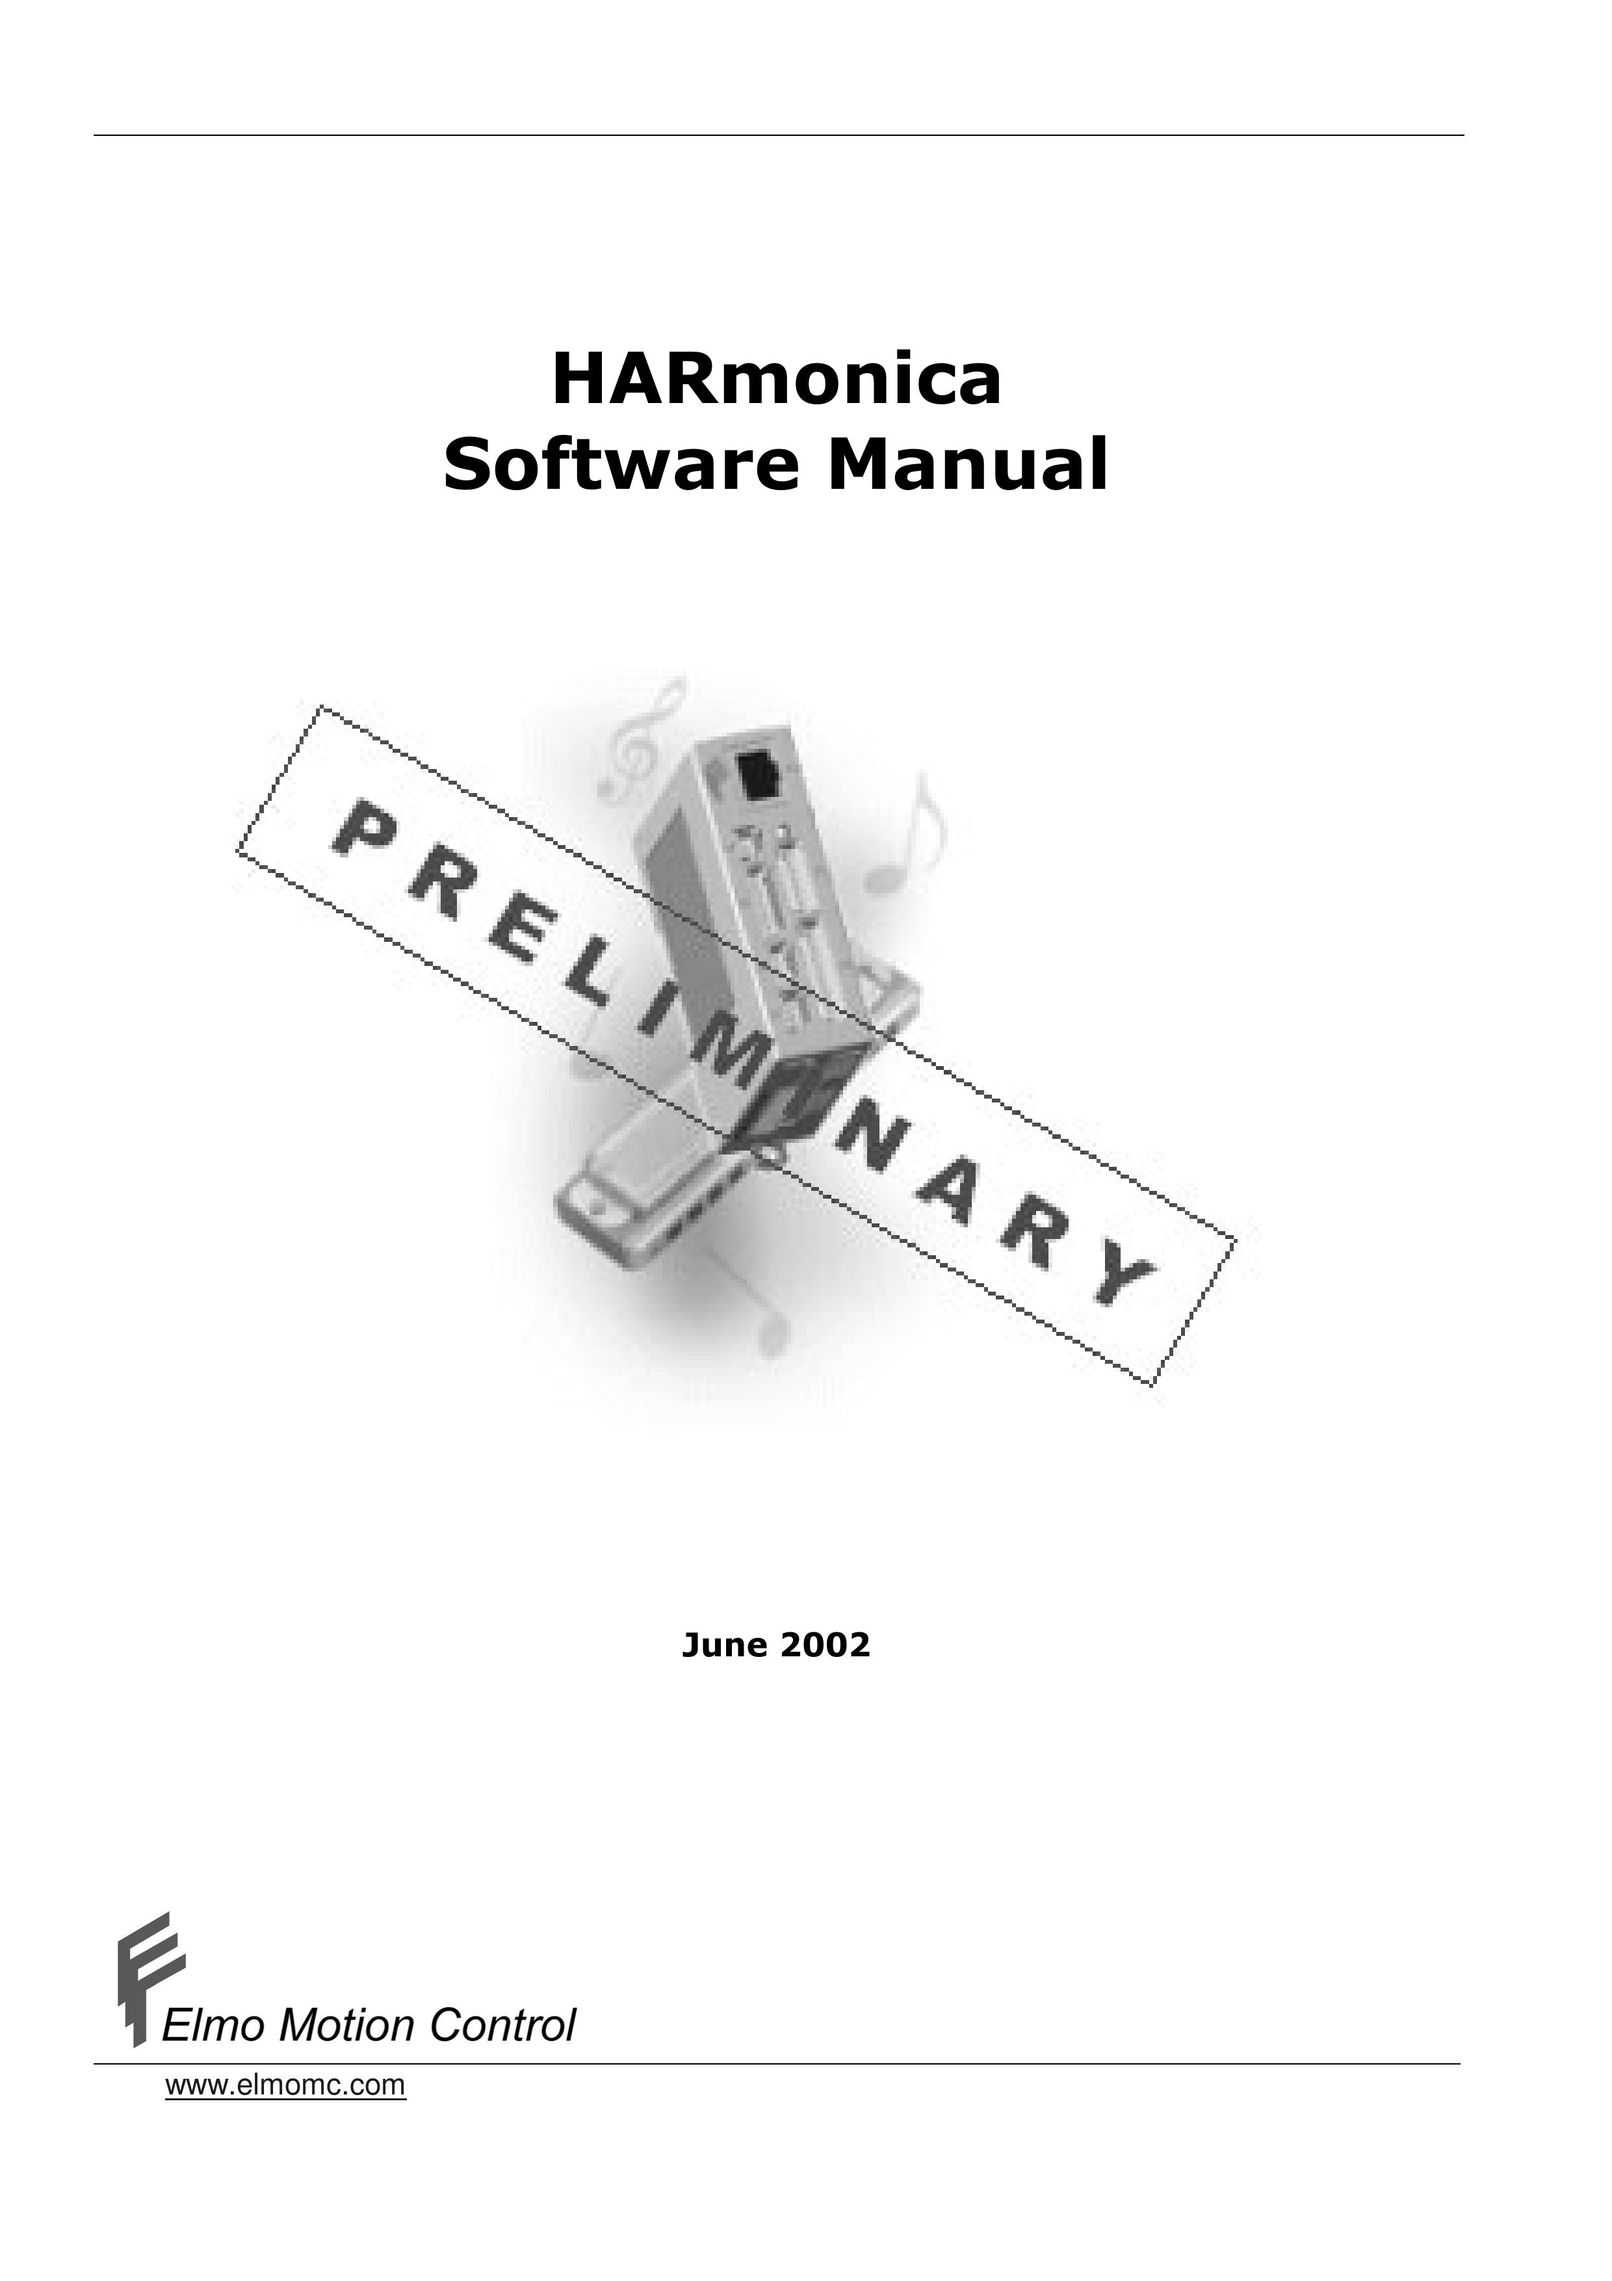 Elmo HARmonica Network Hardware User Manual